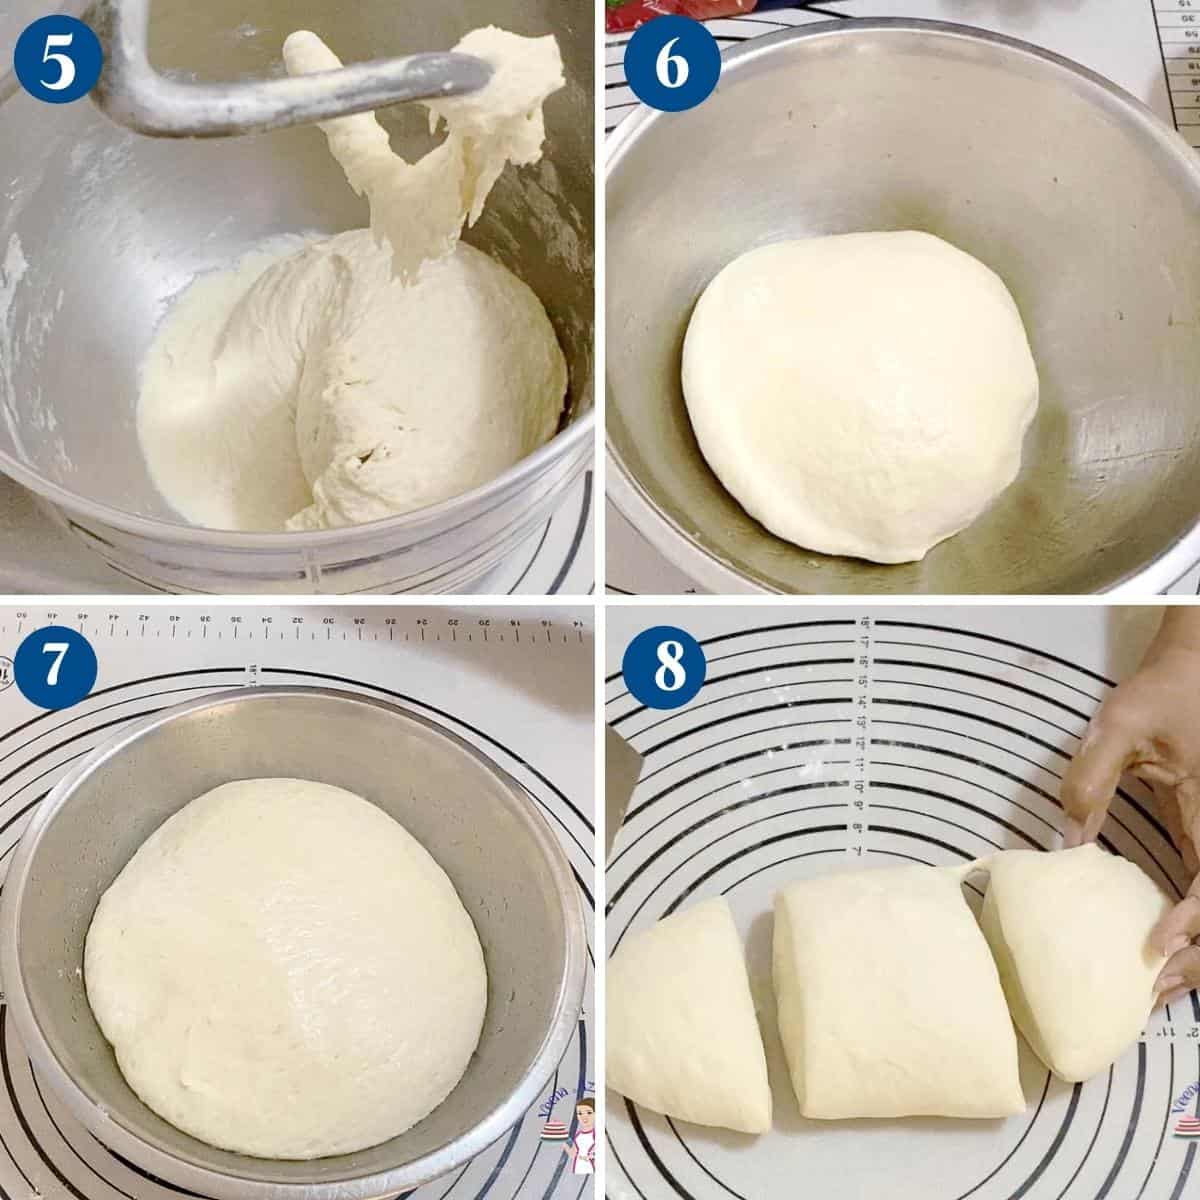 Progress pictures kneading pizza dough.